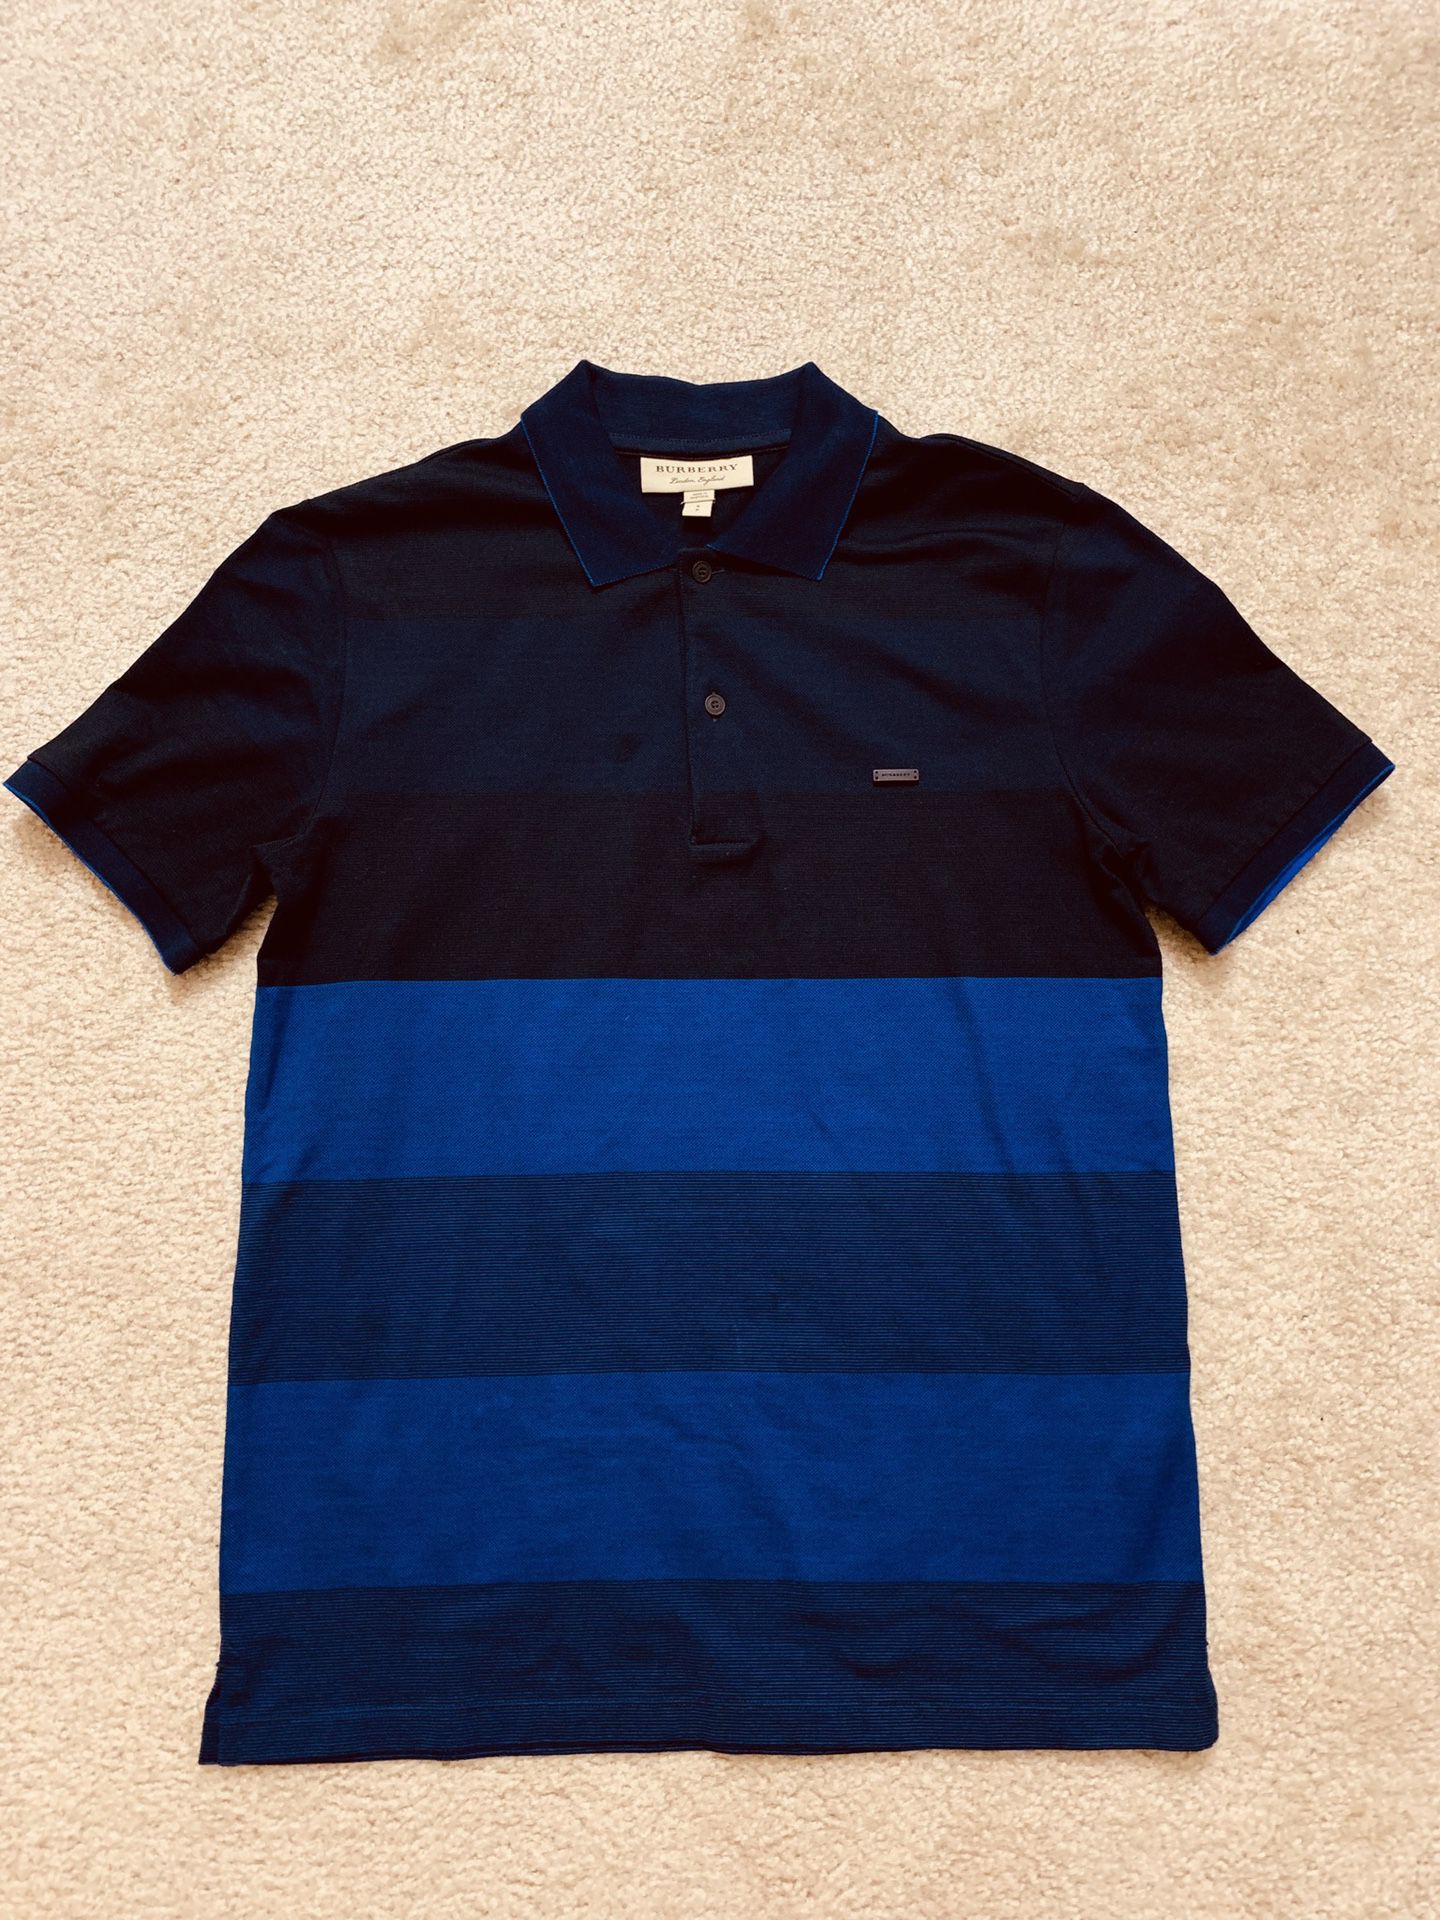 Burberry Polo Shirt Men Size S - Mint Condition